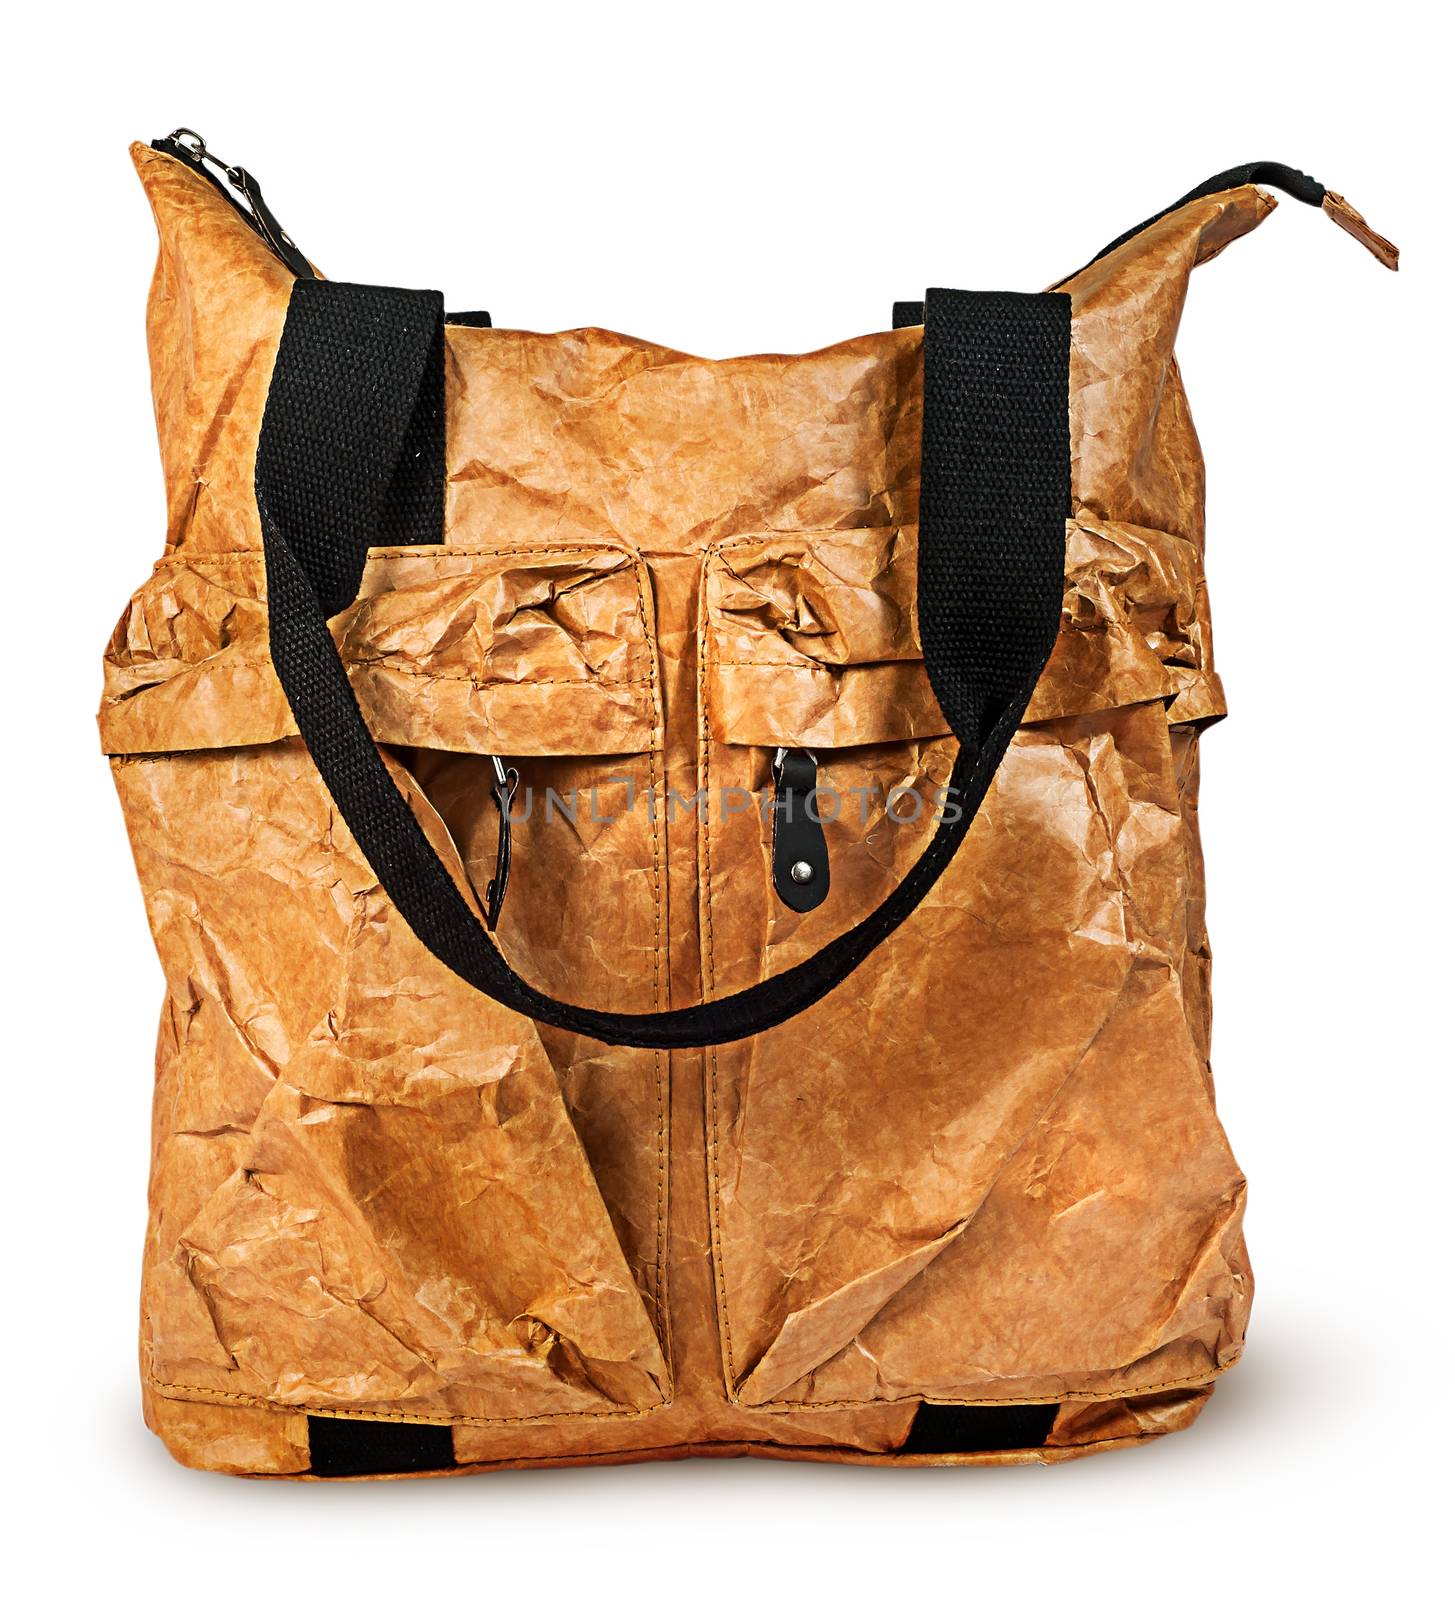 Stylish elegant paper ladies handbag by Cipariss